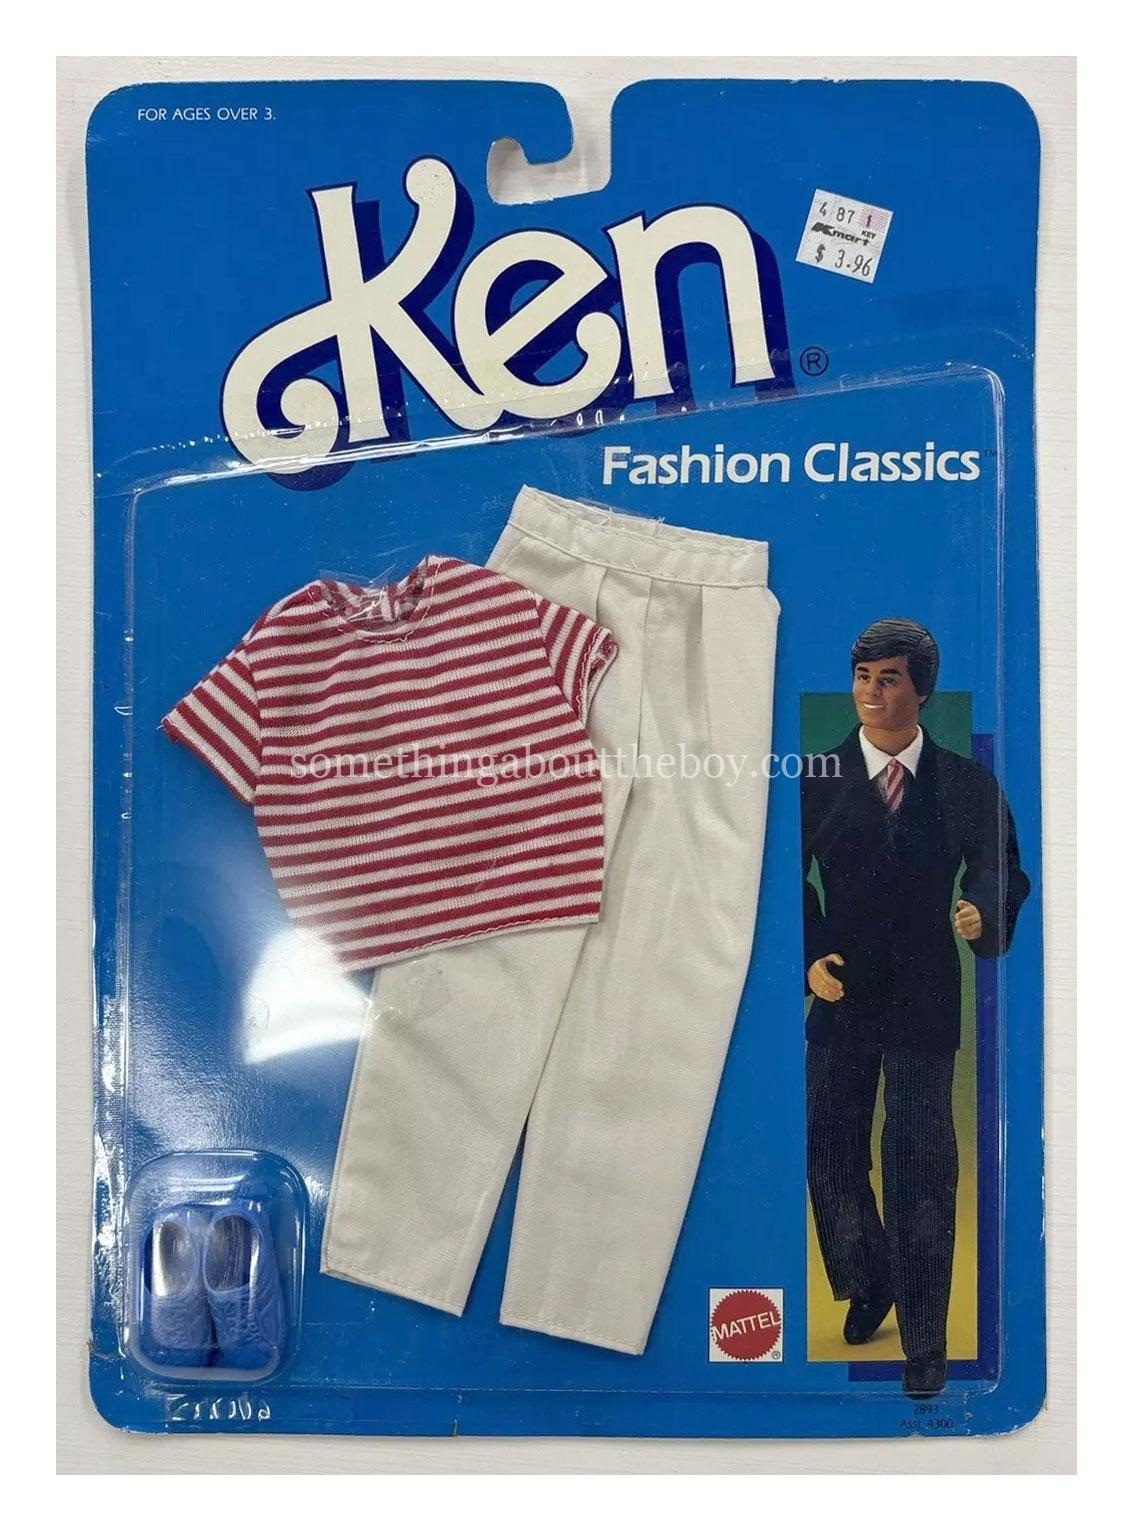 1986-87 Kmart Fashion Classics #2893 (Variation 4)